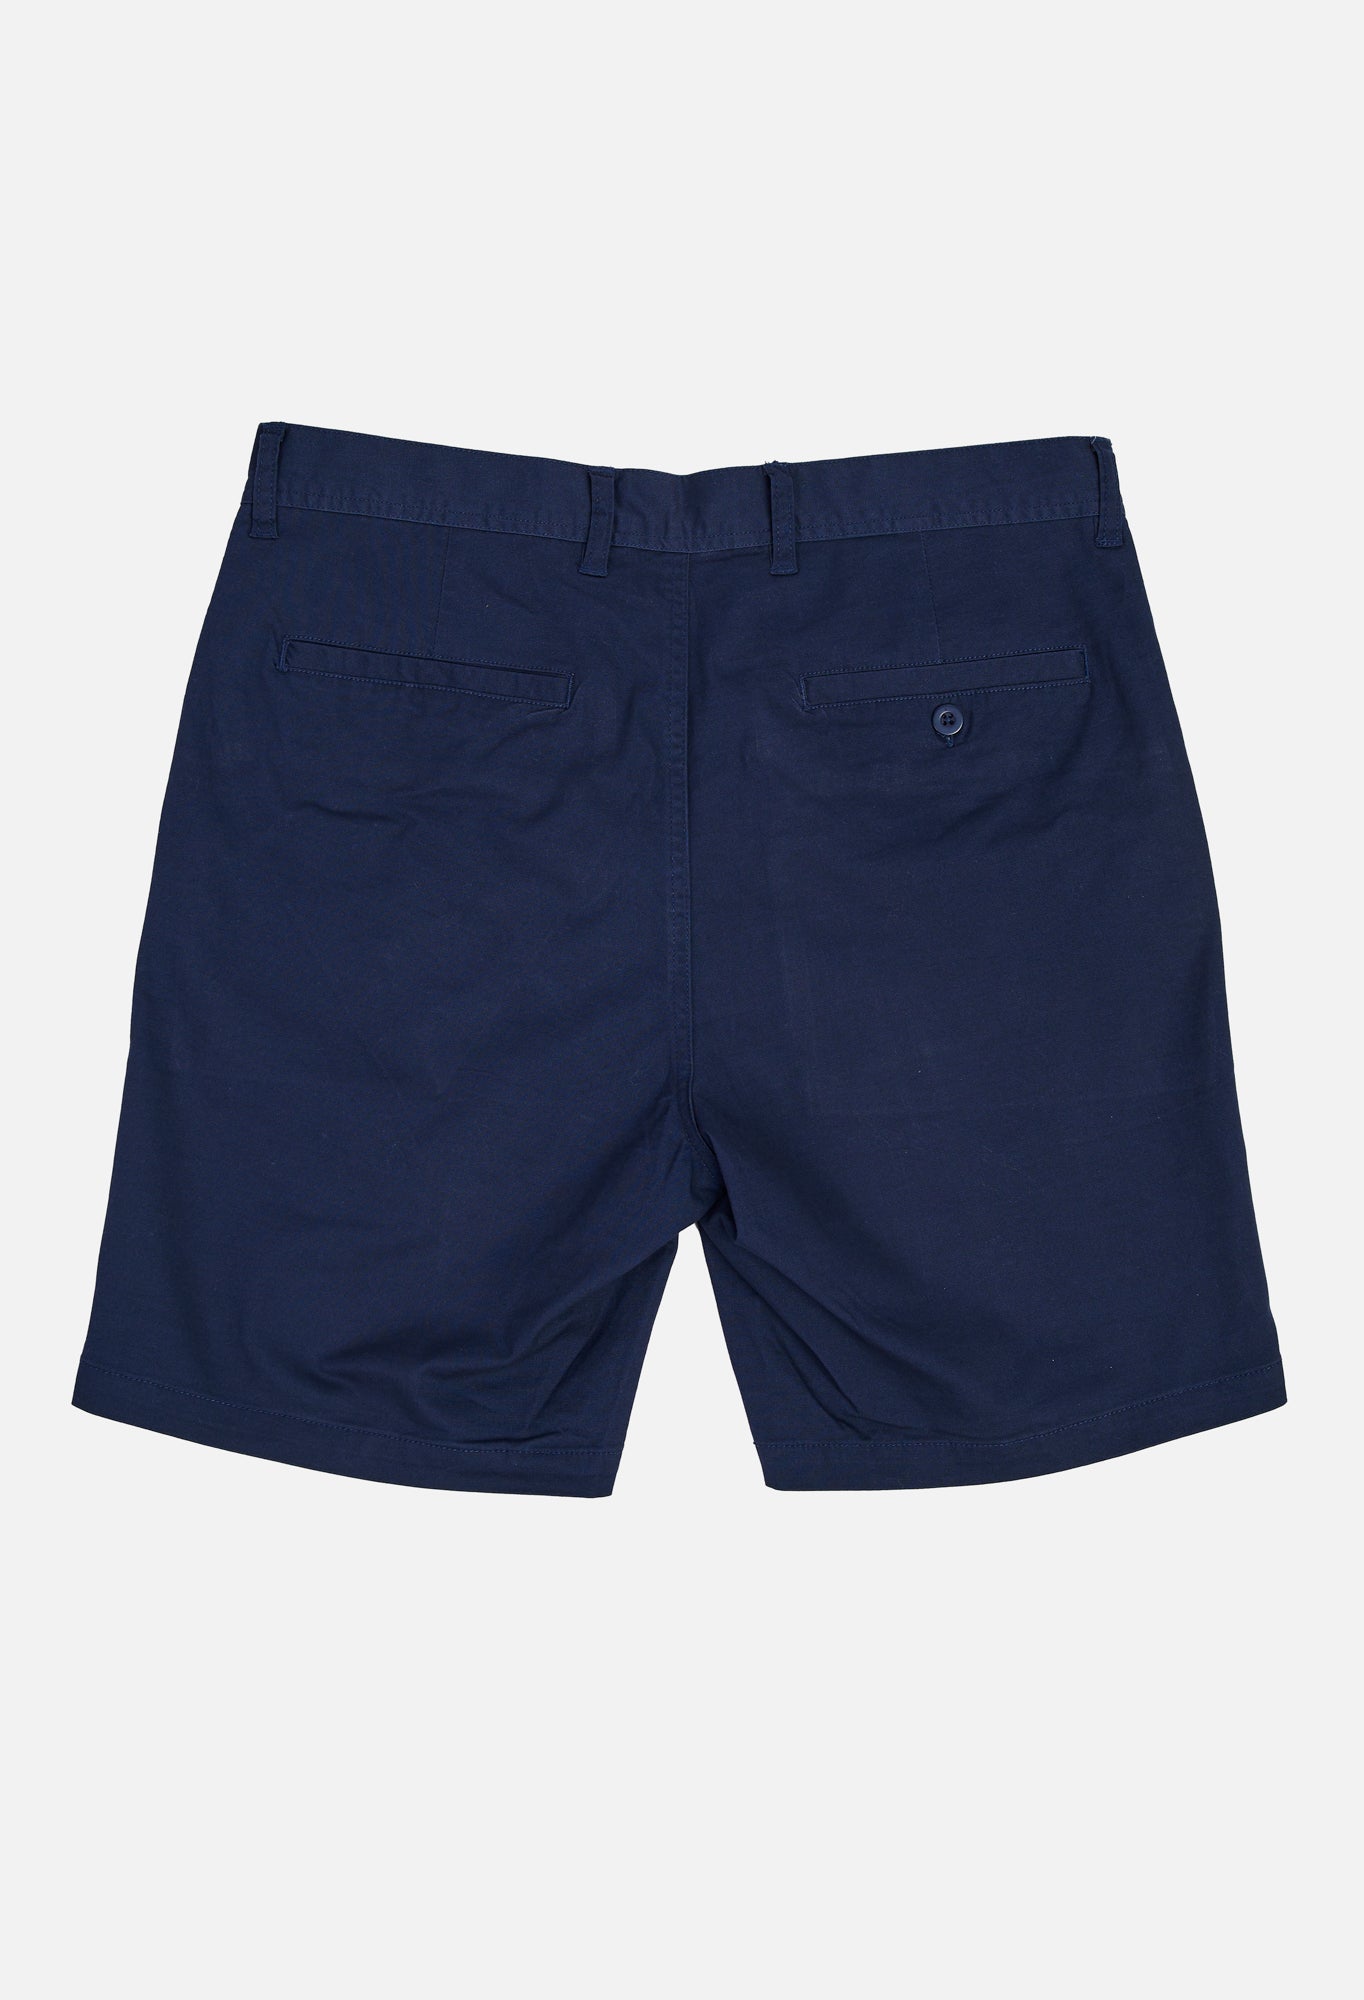 NL Navy Chino Shorts